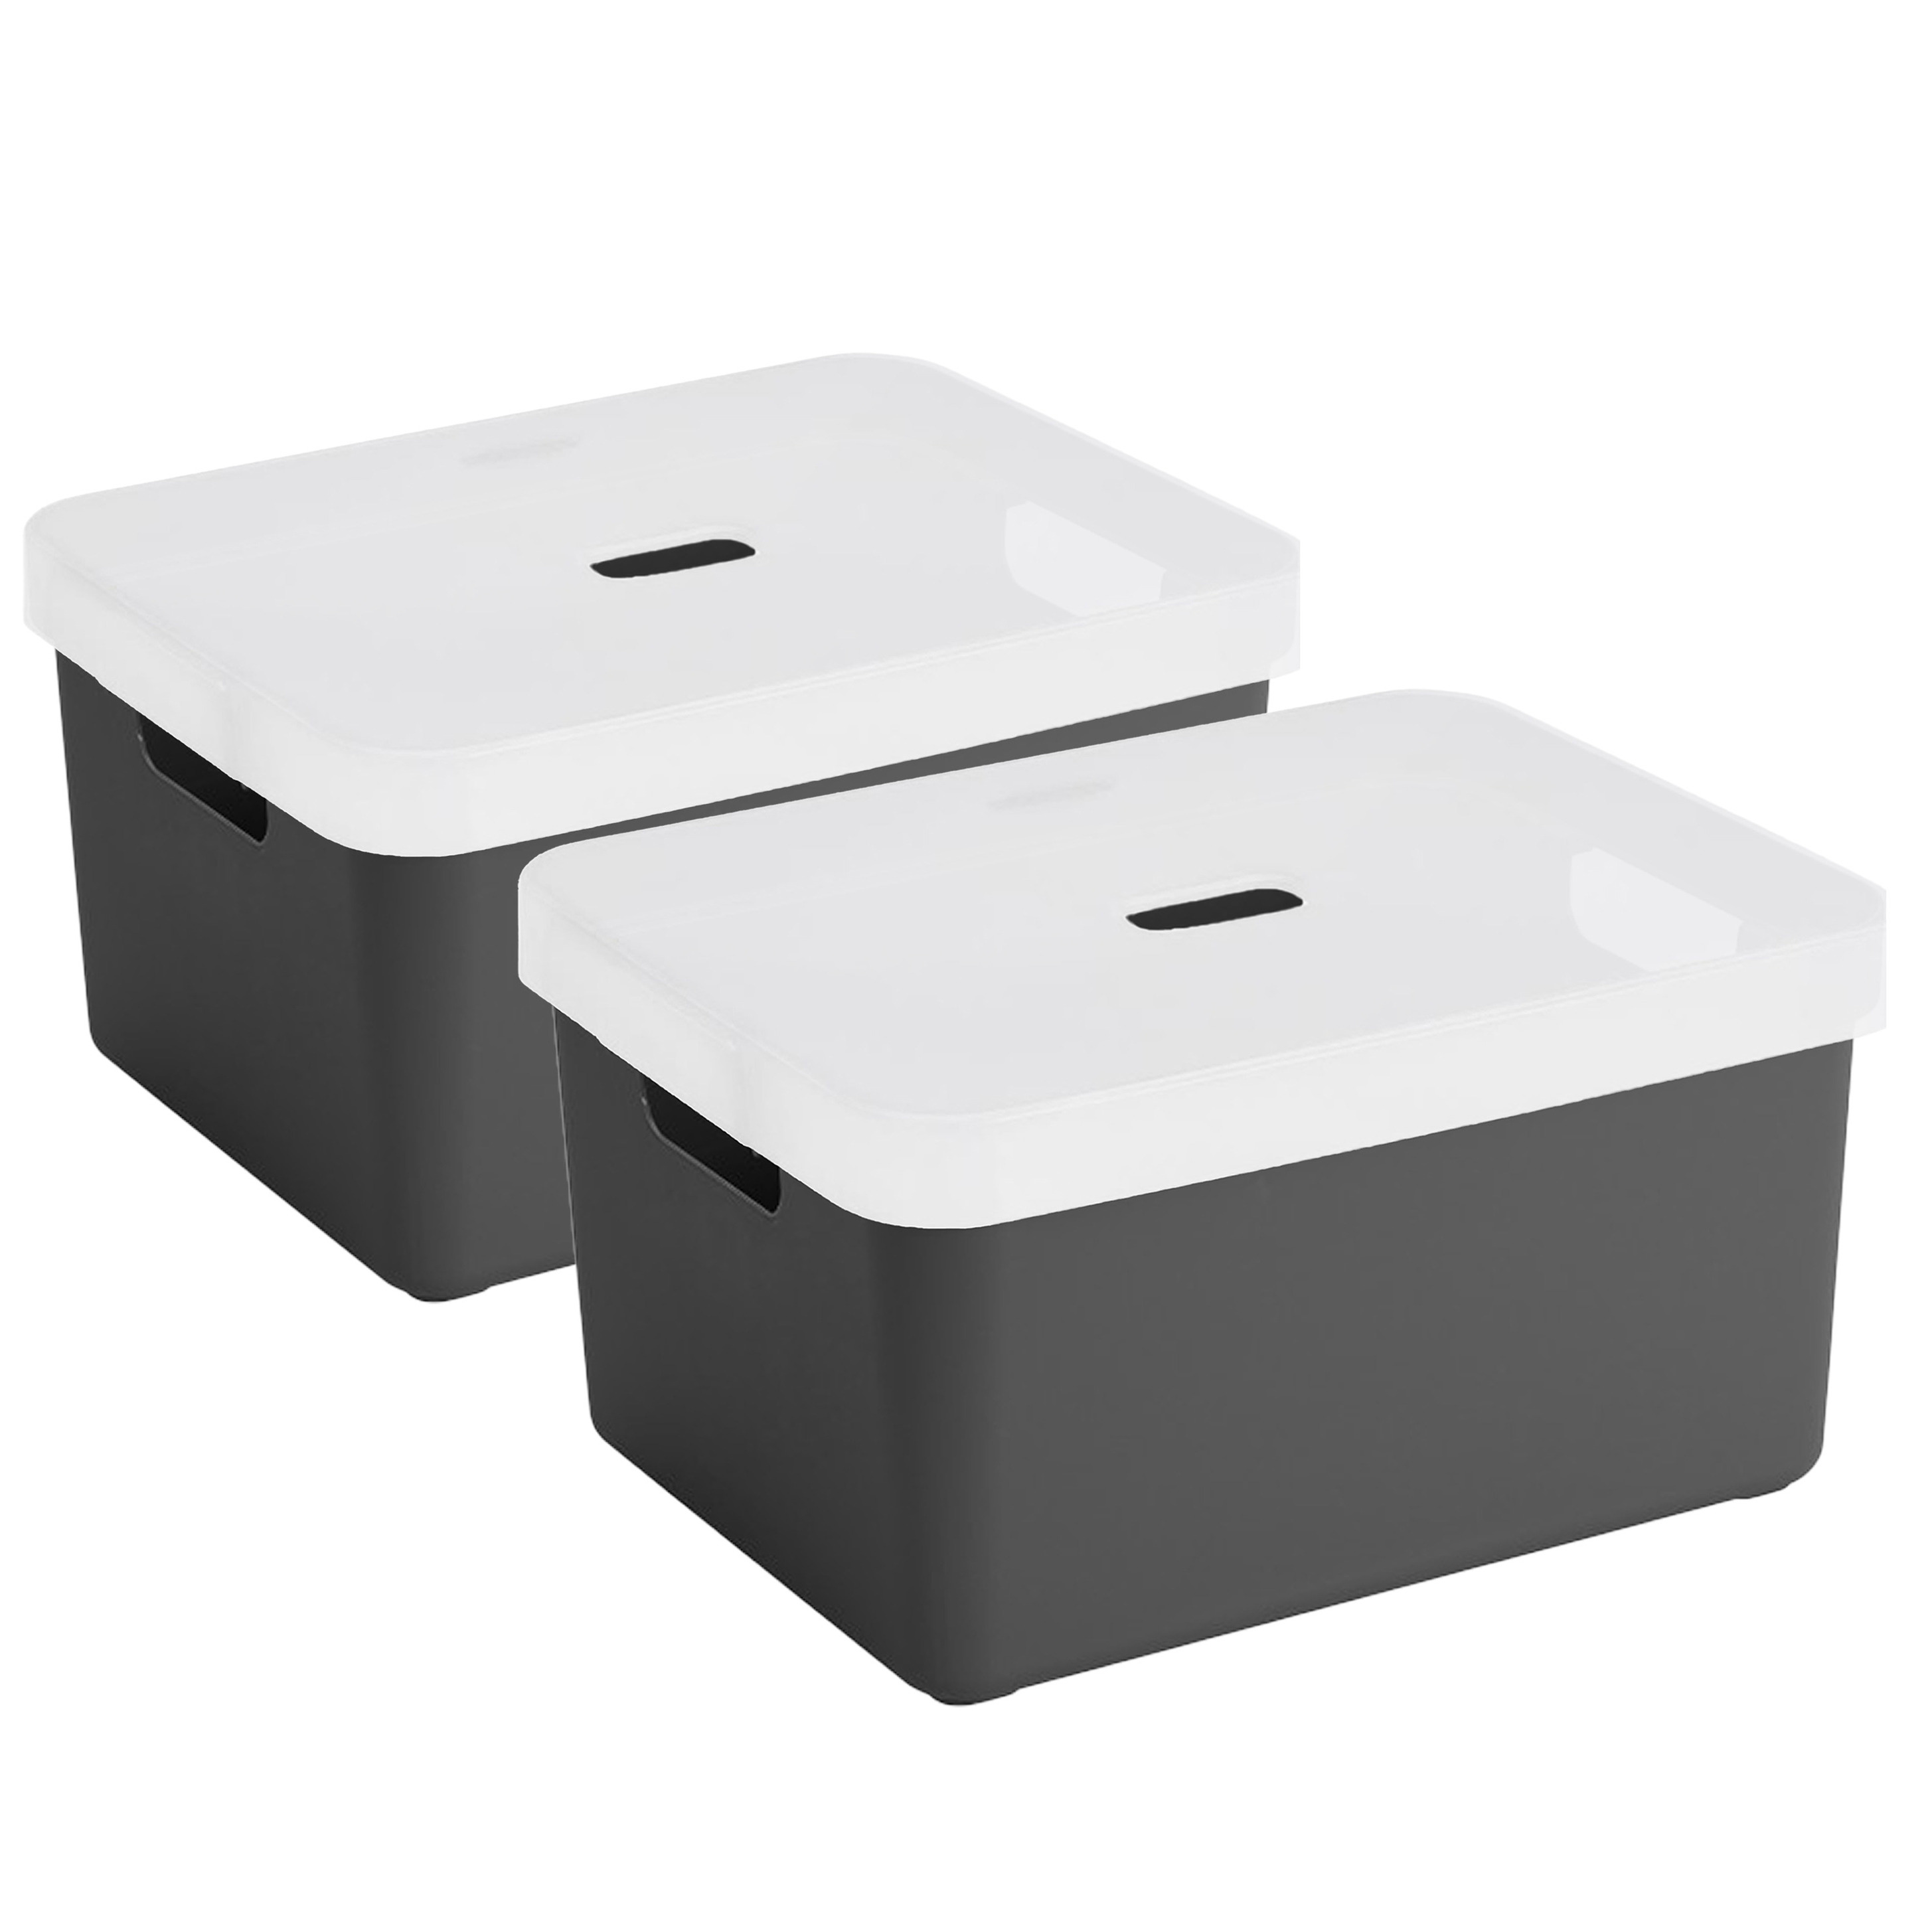 2x Sunware opbergbox-mand 32 liter antraciet grijs kunststof met transparante deksel